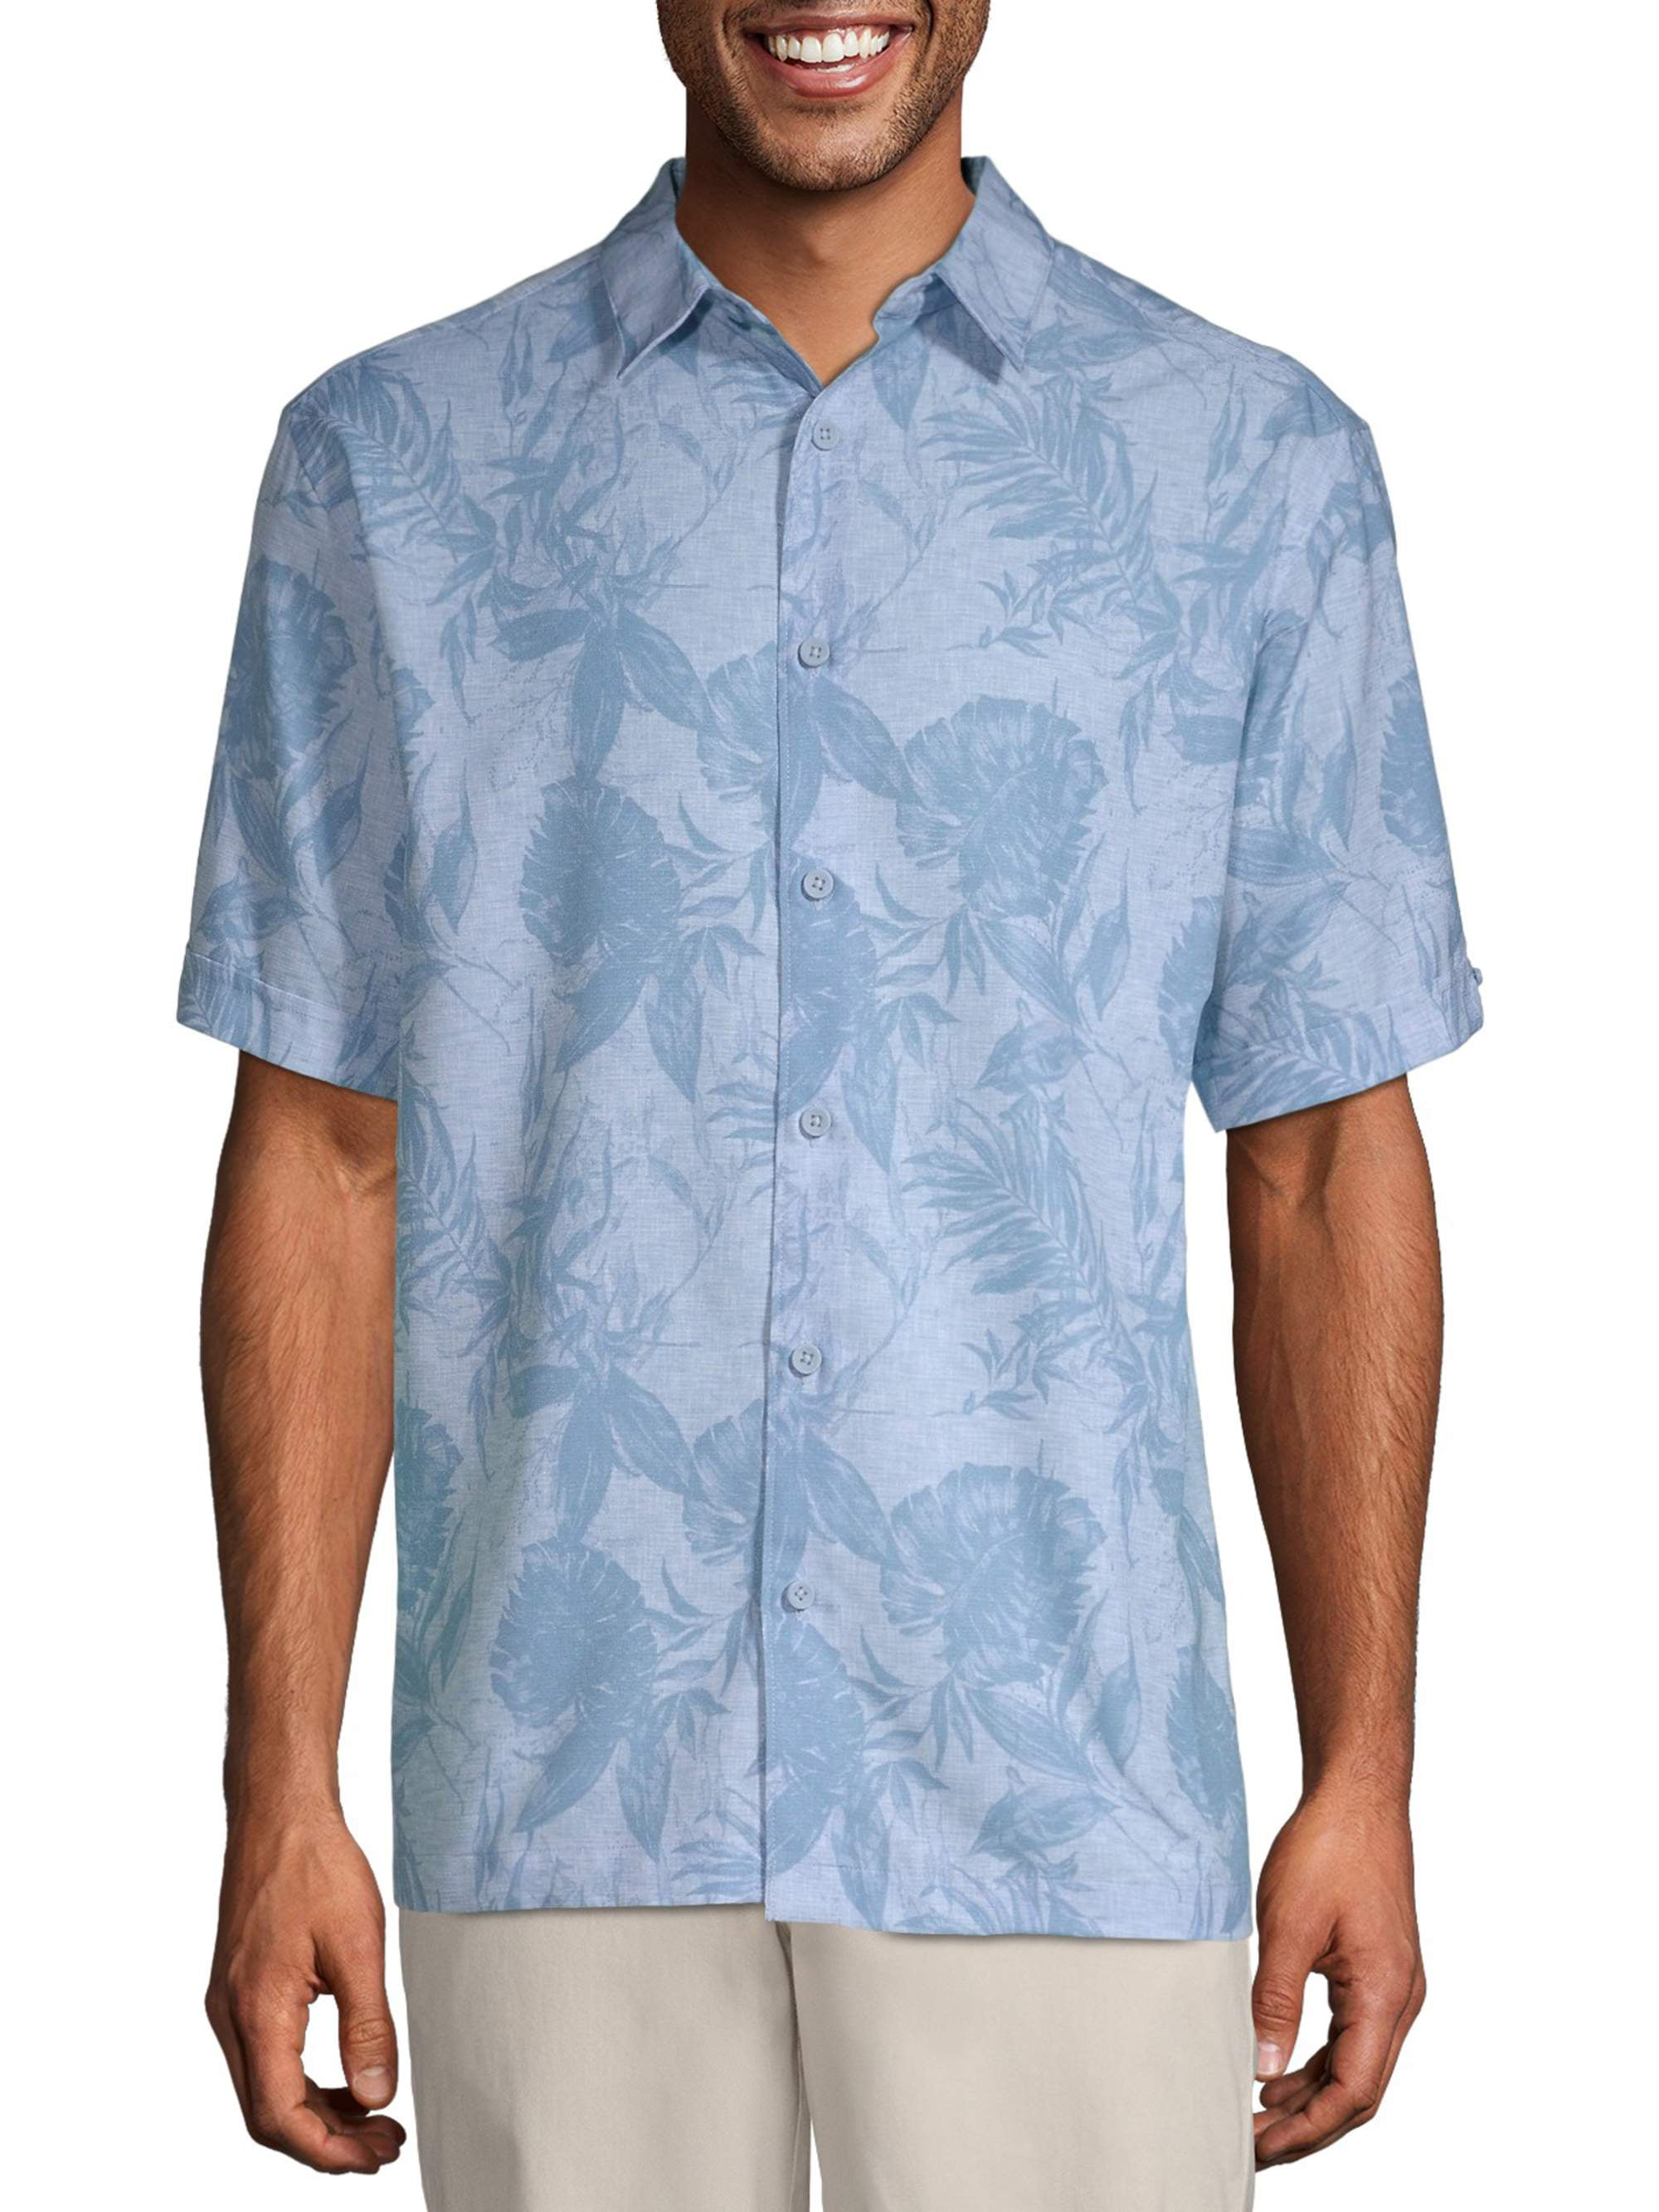 Cafe Luna Men's and Big Men's Short Sleeve Printed Tropical Woven Shirt ...